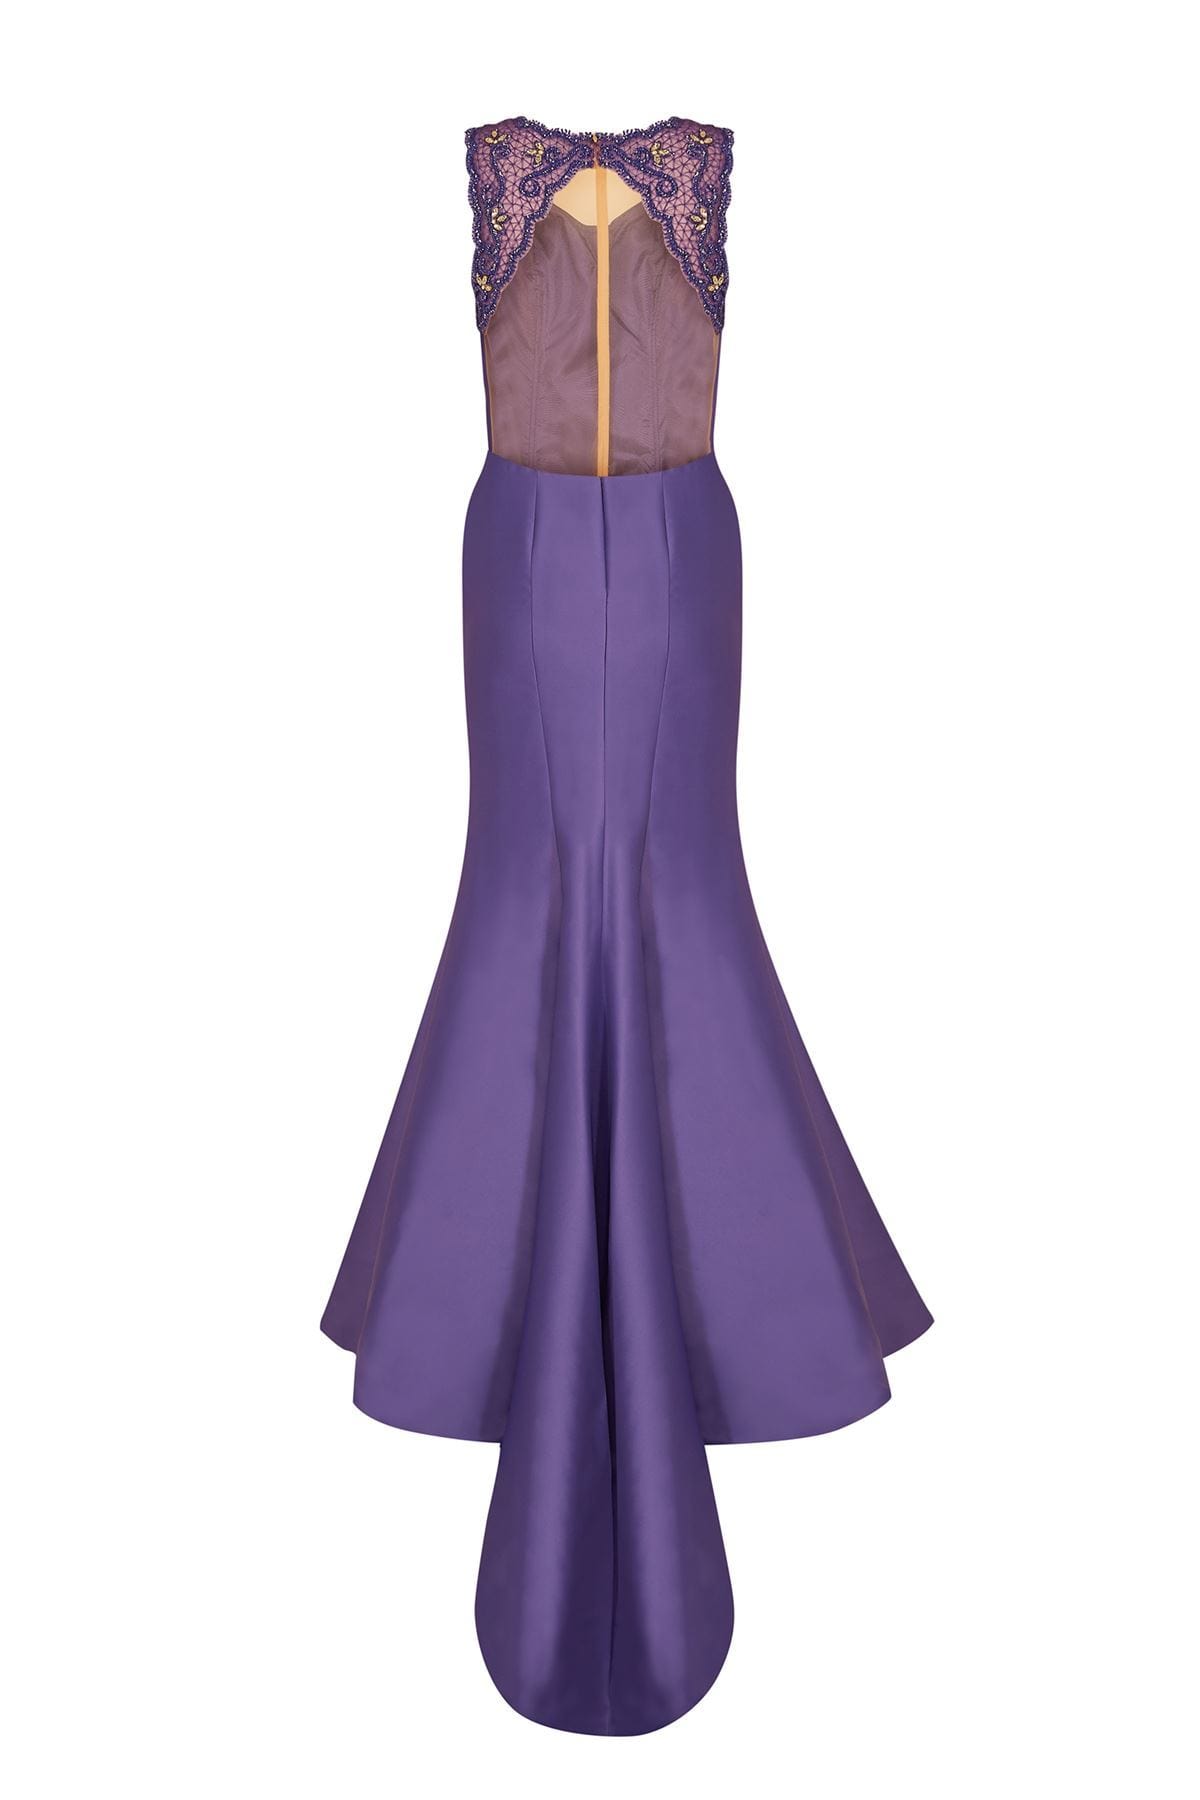 Tarik Ediz - Bateau Neck Mermaid Gown 50020 Special Occasion Dress